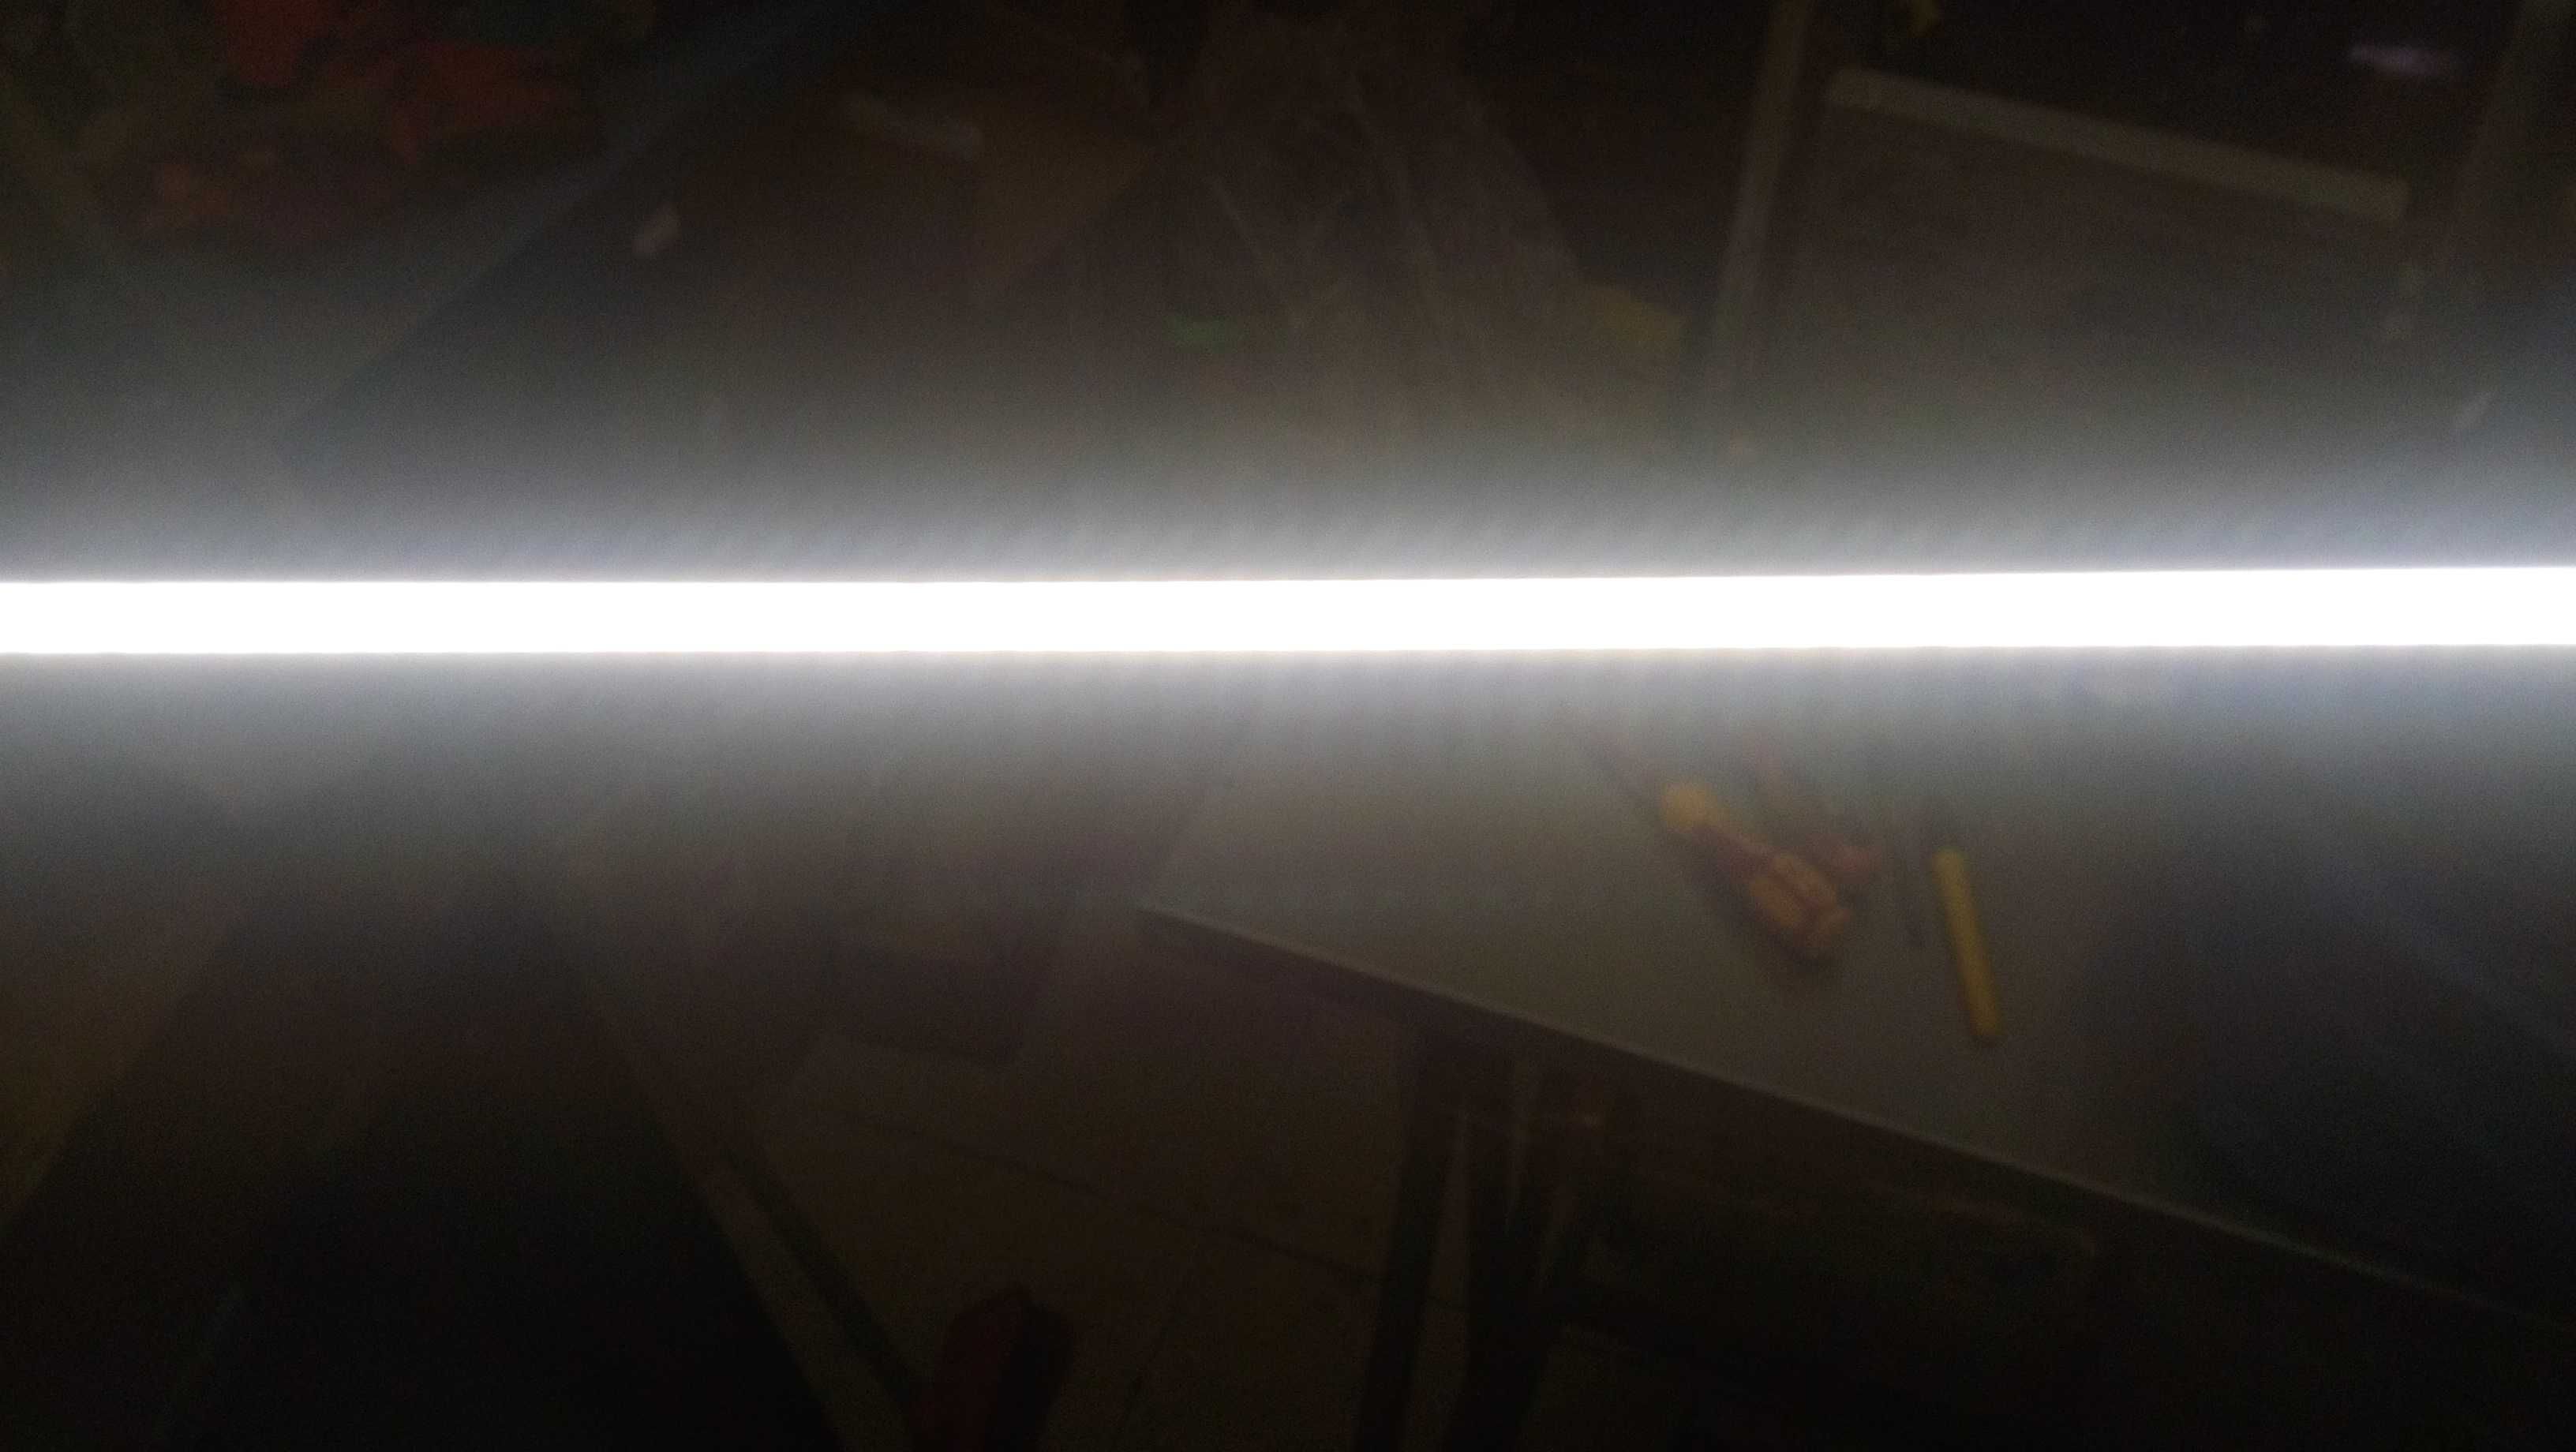 Listwy LED Profi Wysoka klasa  Orelle Pro  ACDC Lighting  Zumtobel